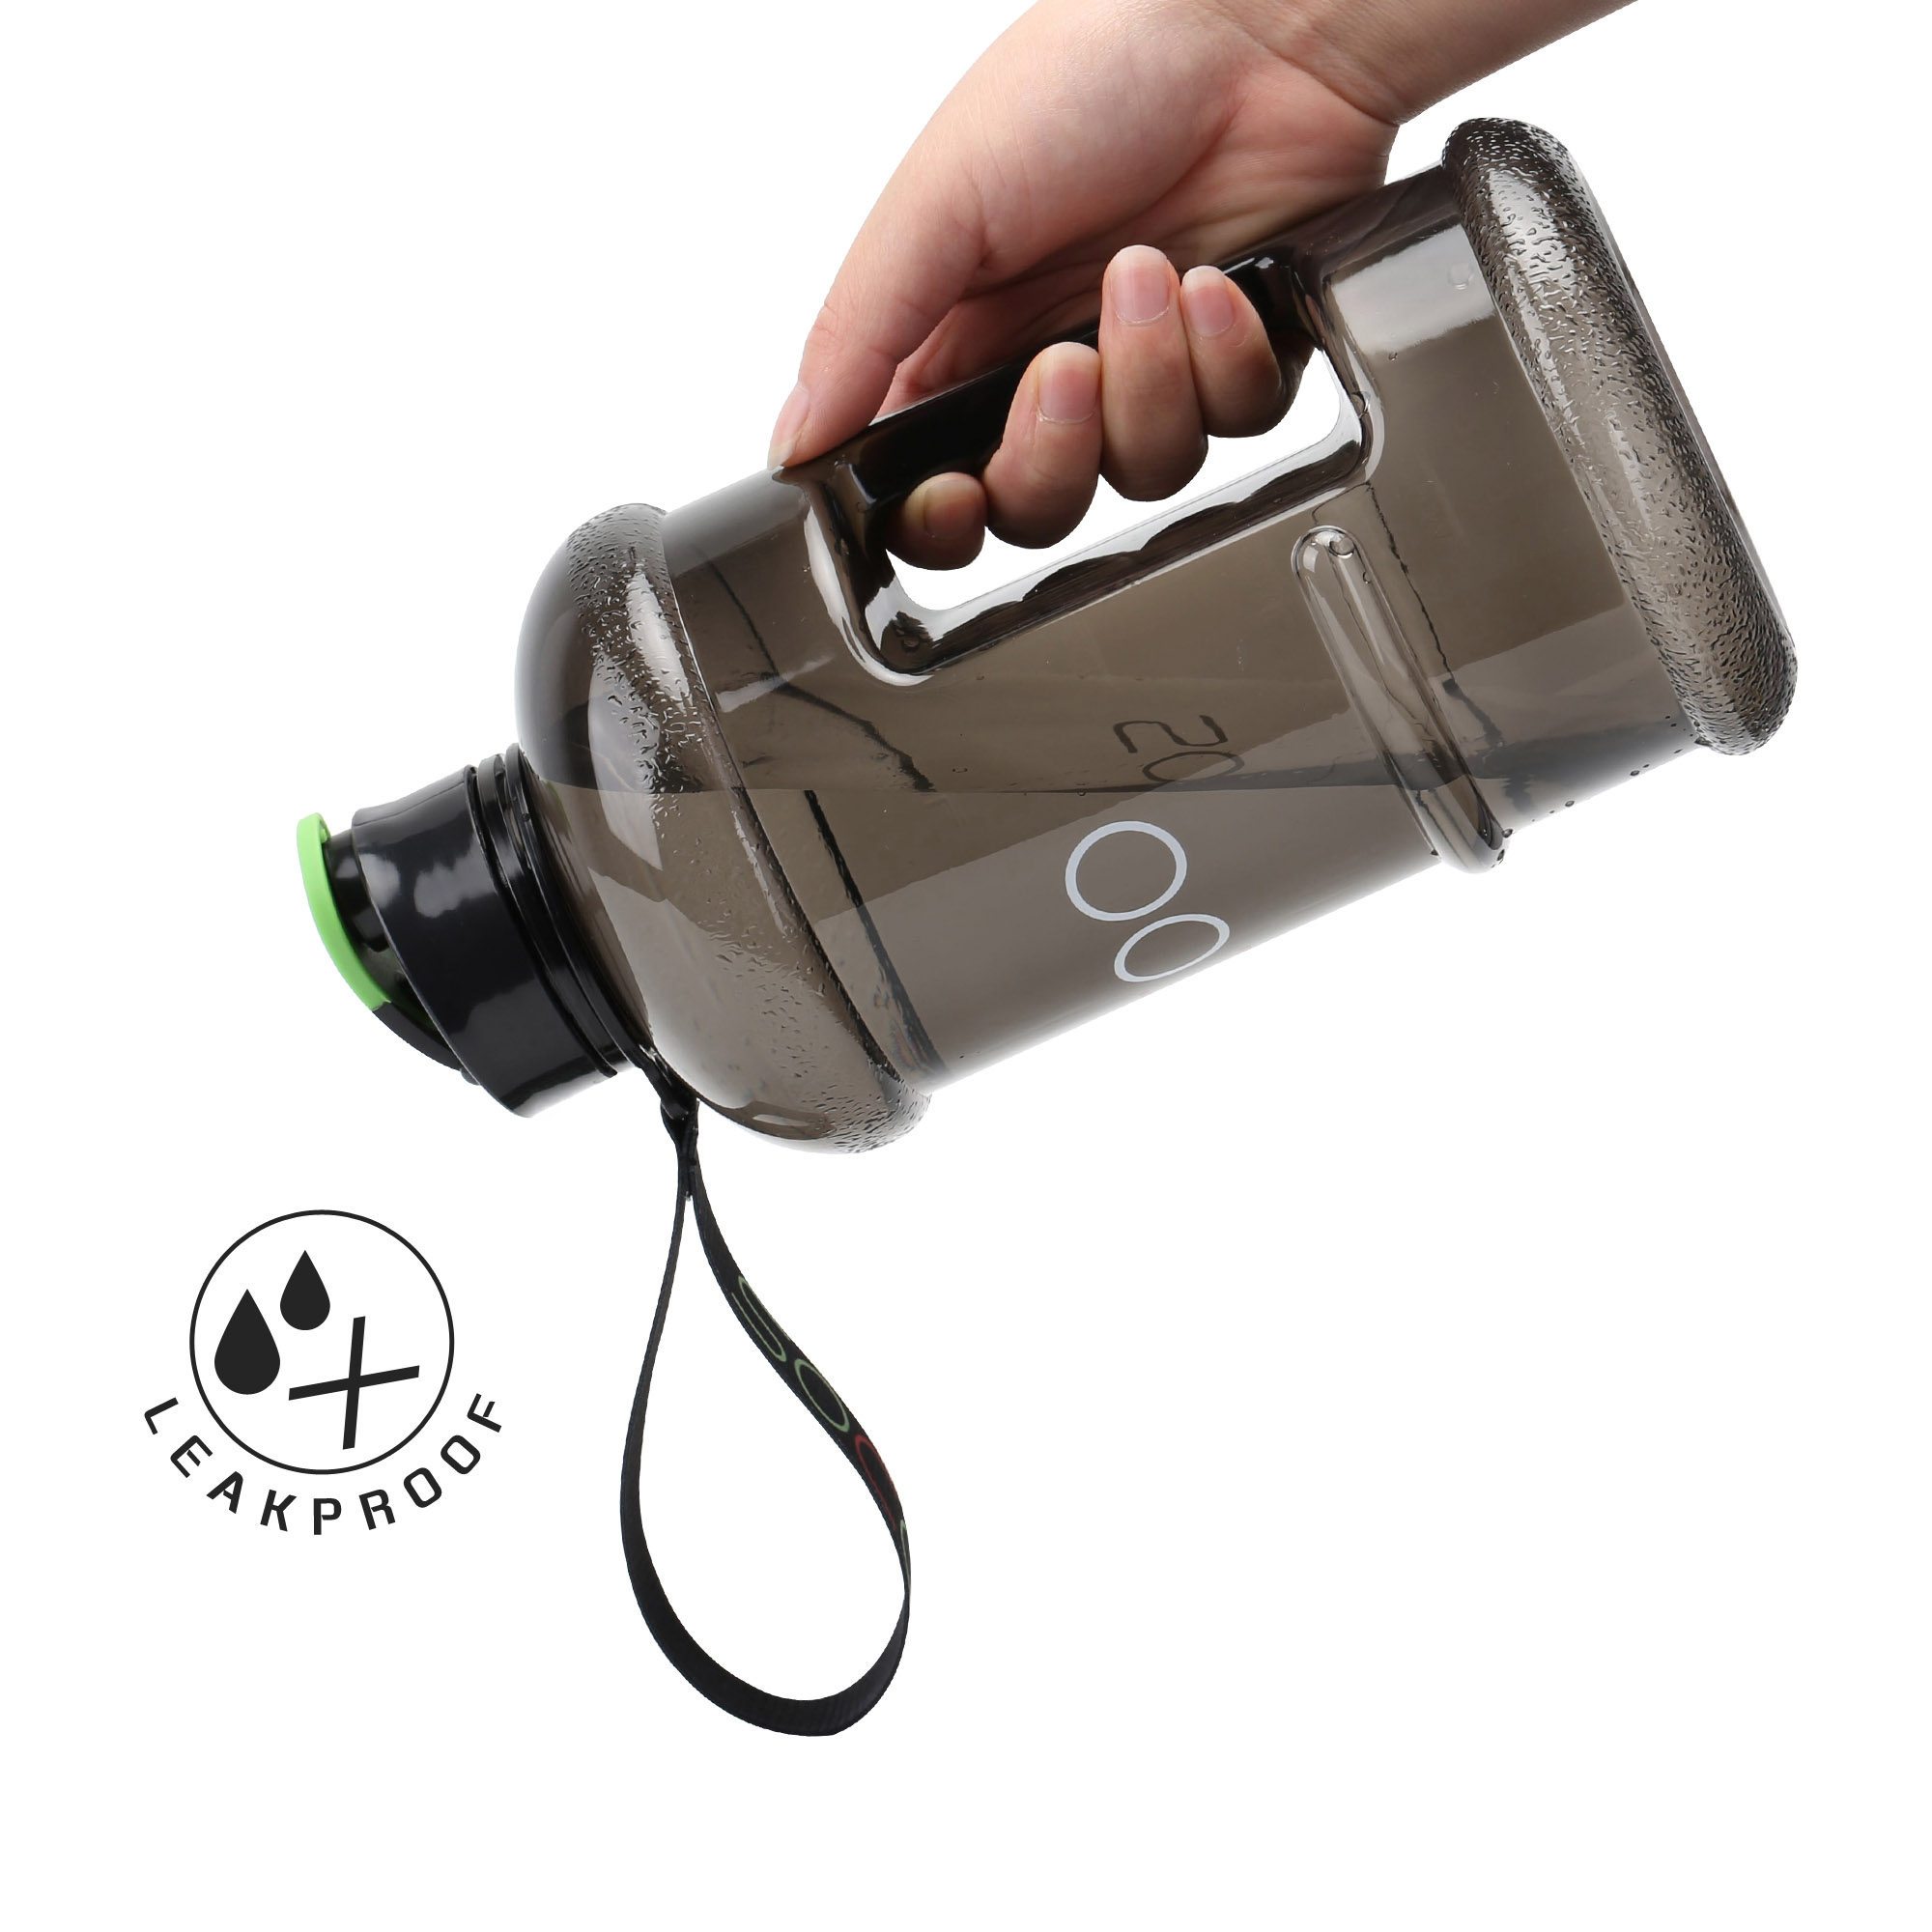 https://www.socoobottle.com/wp-content/uploads/2018/09/leak-proof-water-bottle-black-transparent-2.jpg